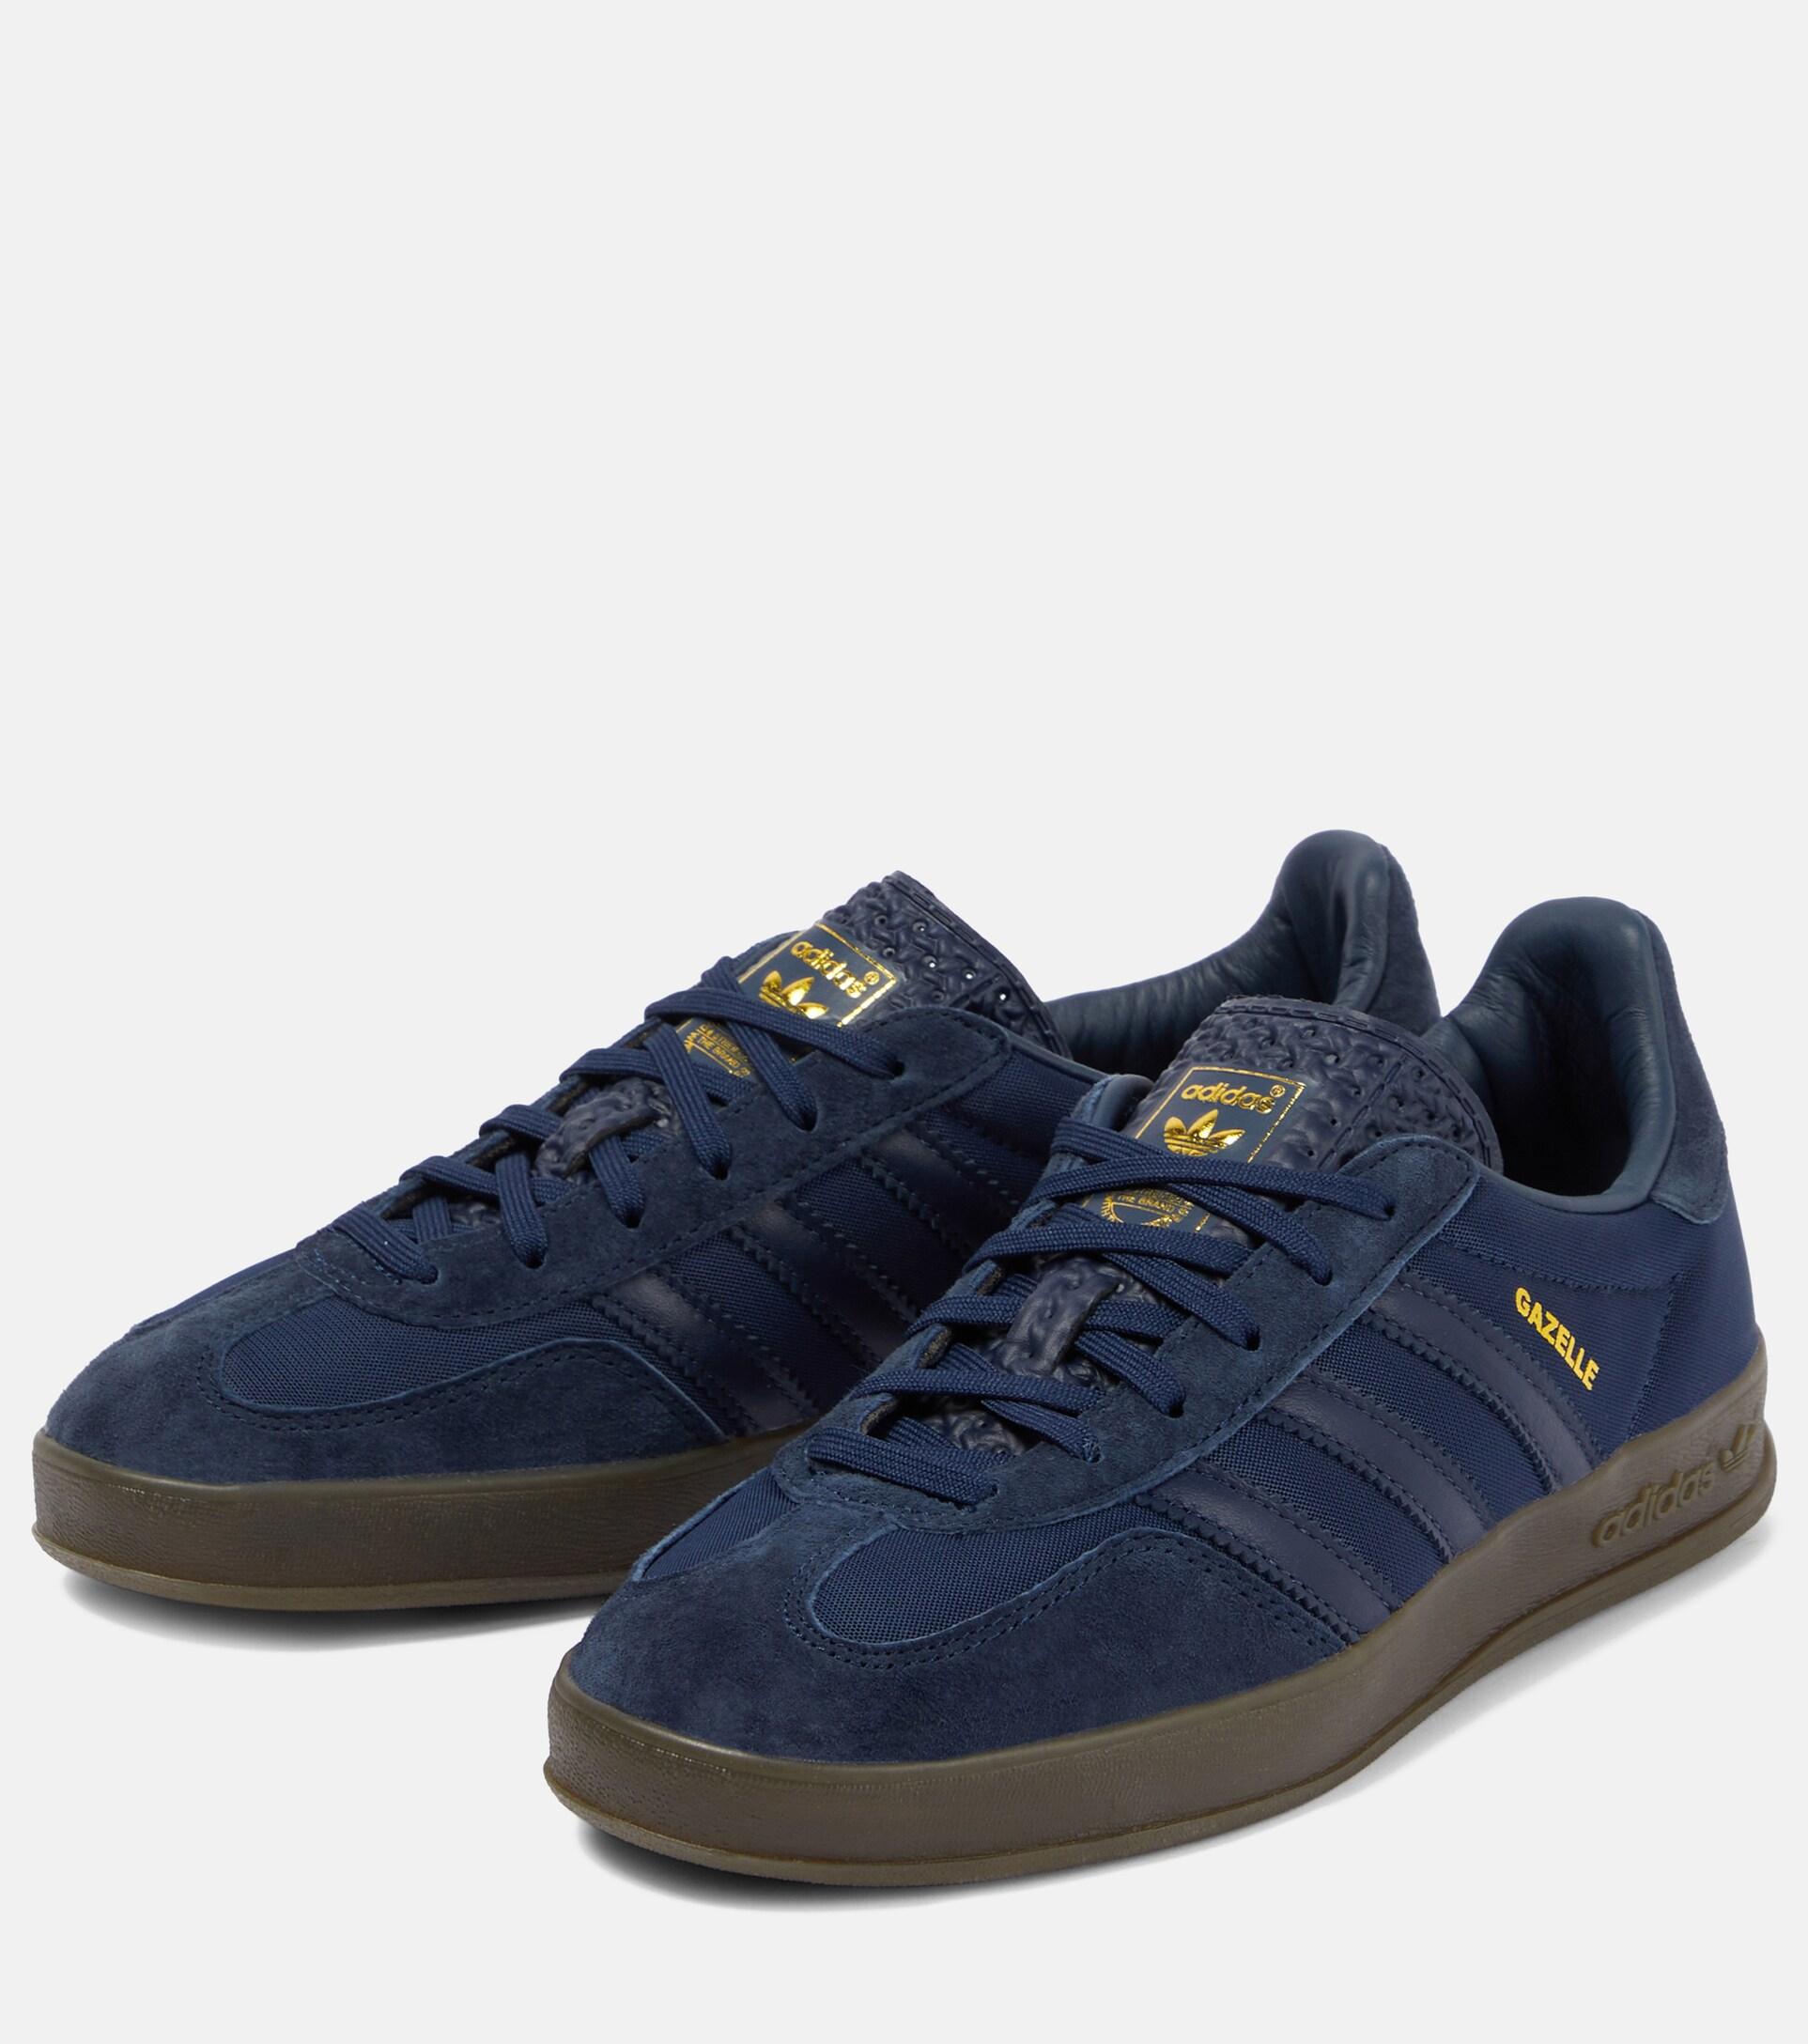 adidas Gazelle Indoor Suede Sneakers in Blue | Lyst